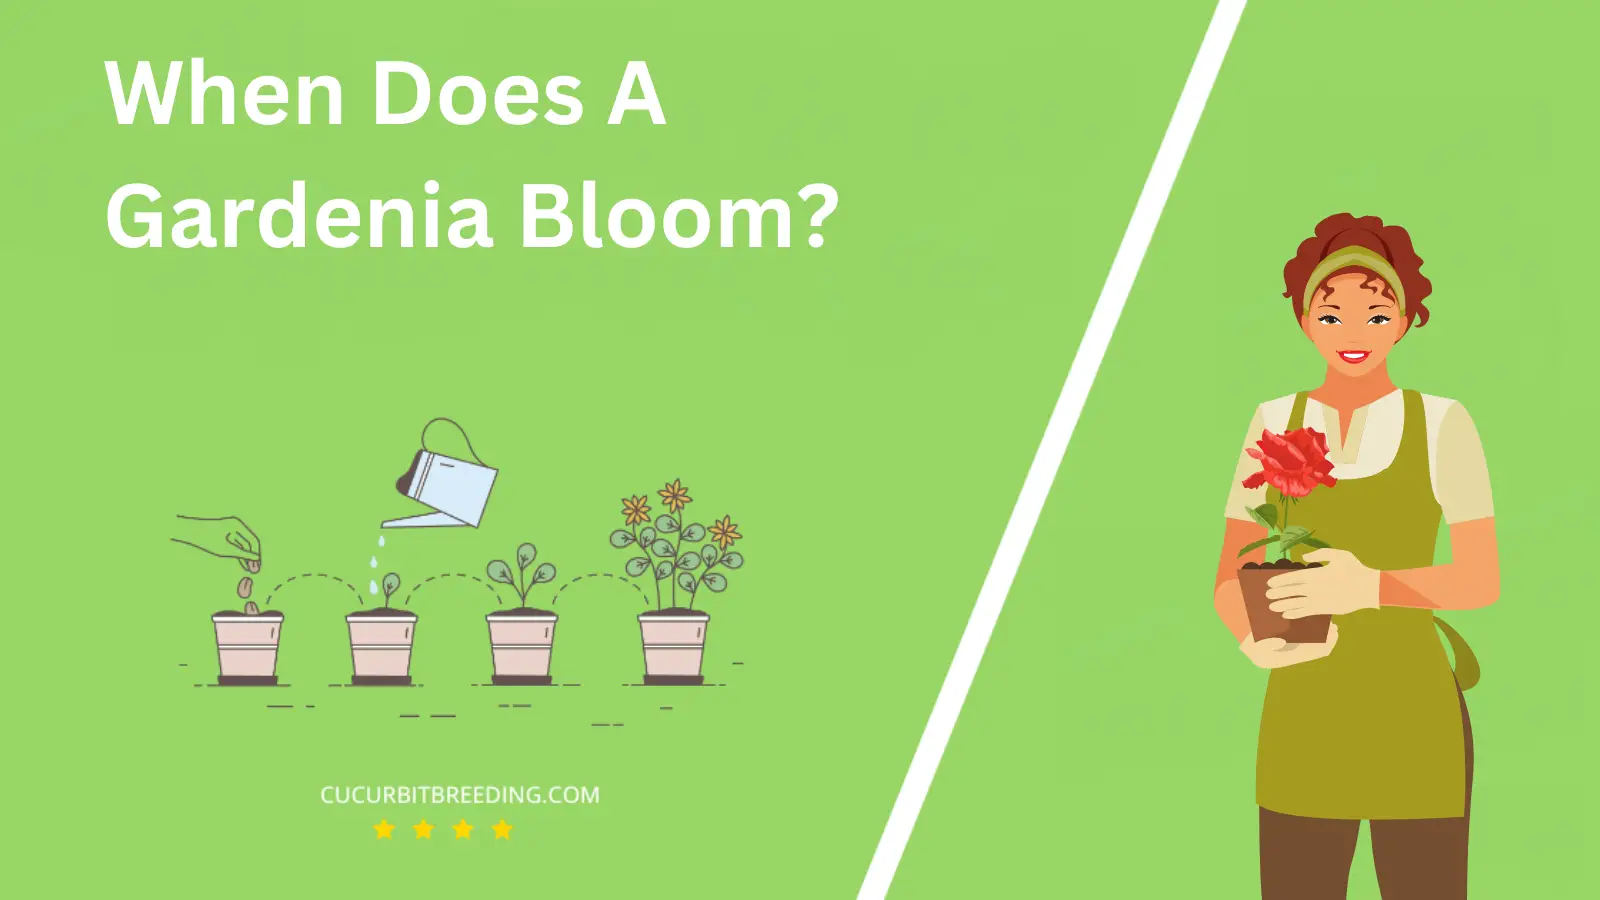 When Does A Gardenia Bloom?